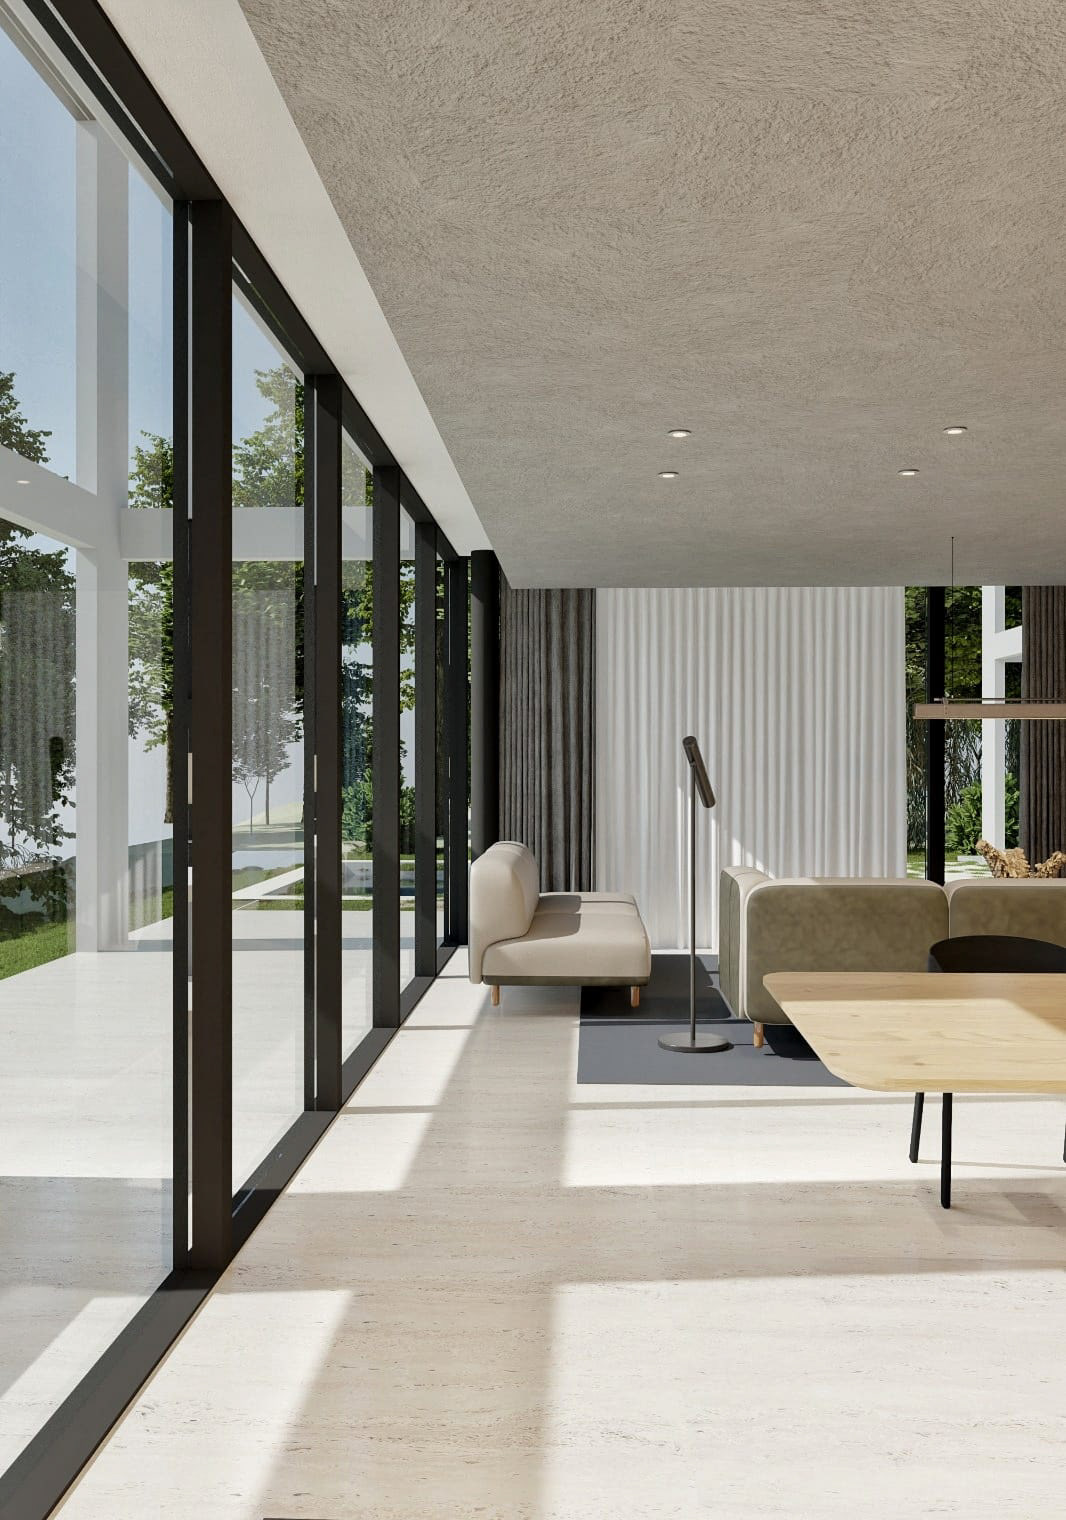 architecture visualization Render interior design  modern exterior vray SketchUP 3D lumion